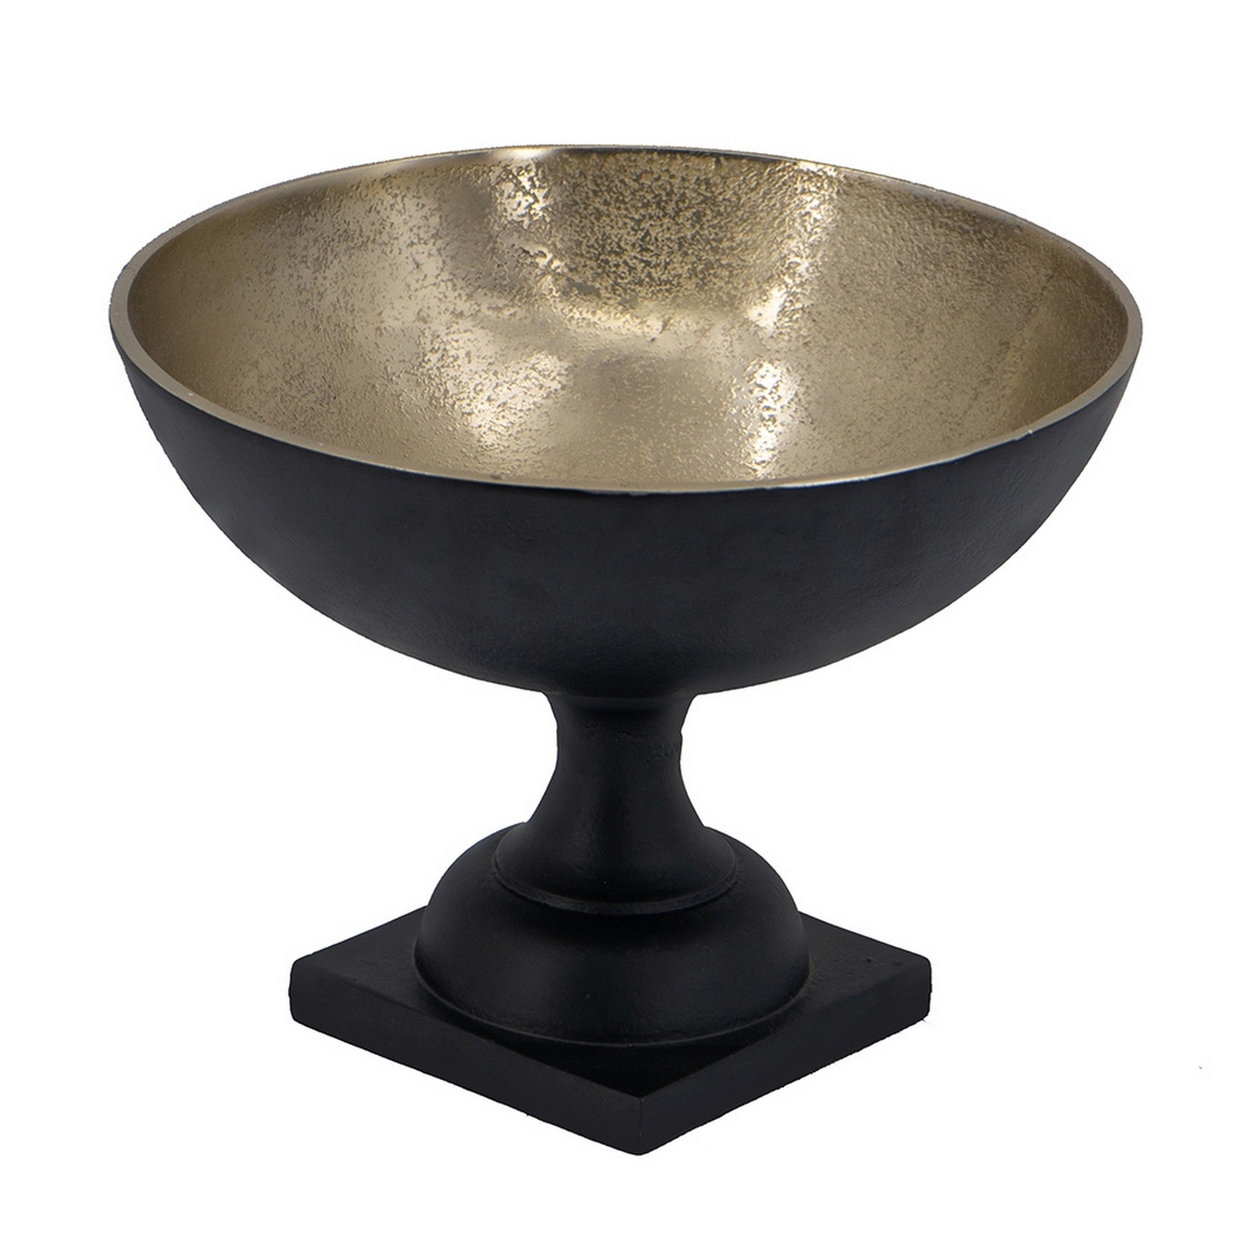 10 Inch Vintage Style Accent Bowl, Gold, Antique Black, Pedestal Stand- Saltoro Sherpi